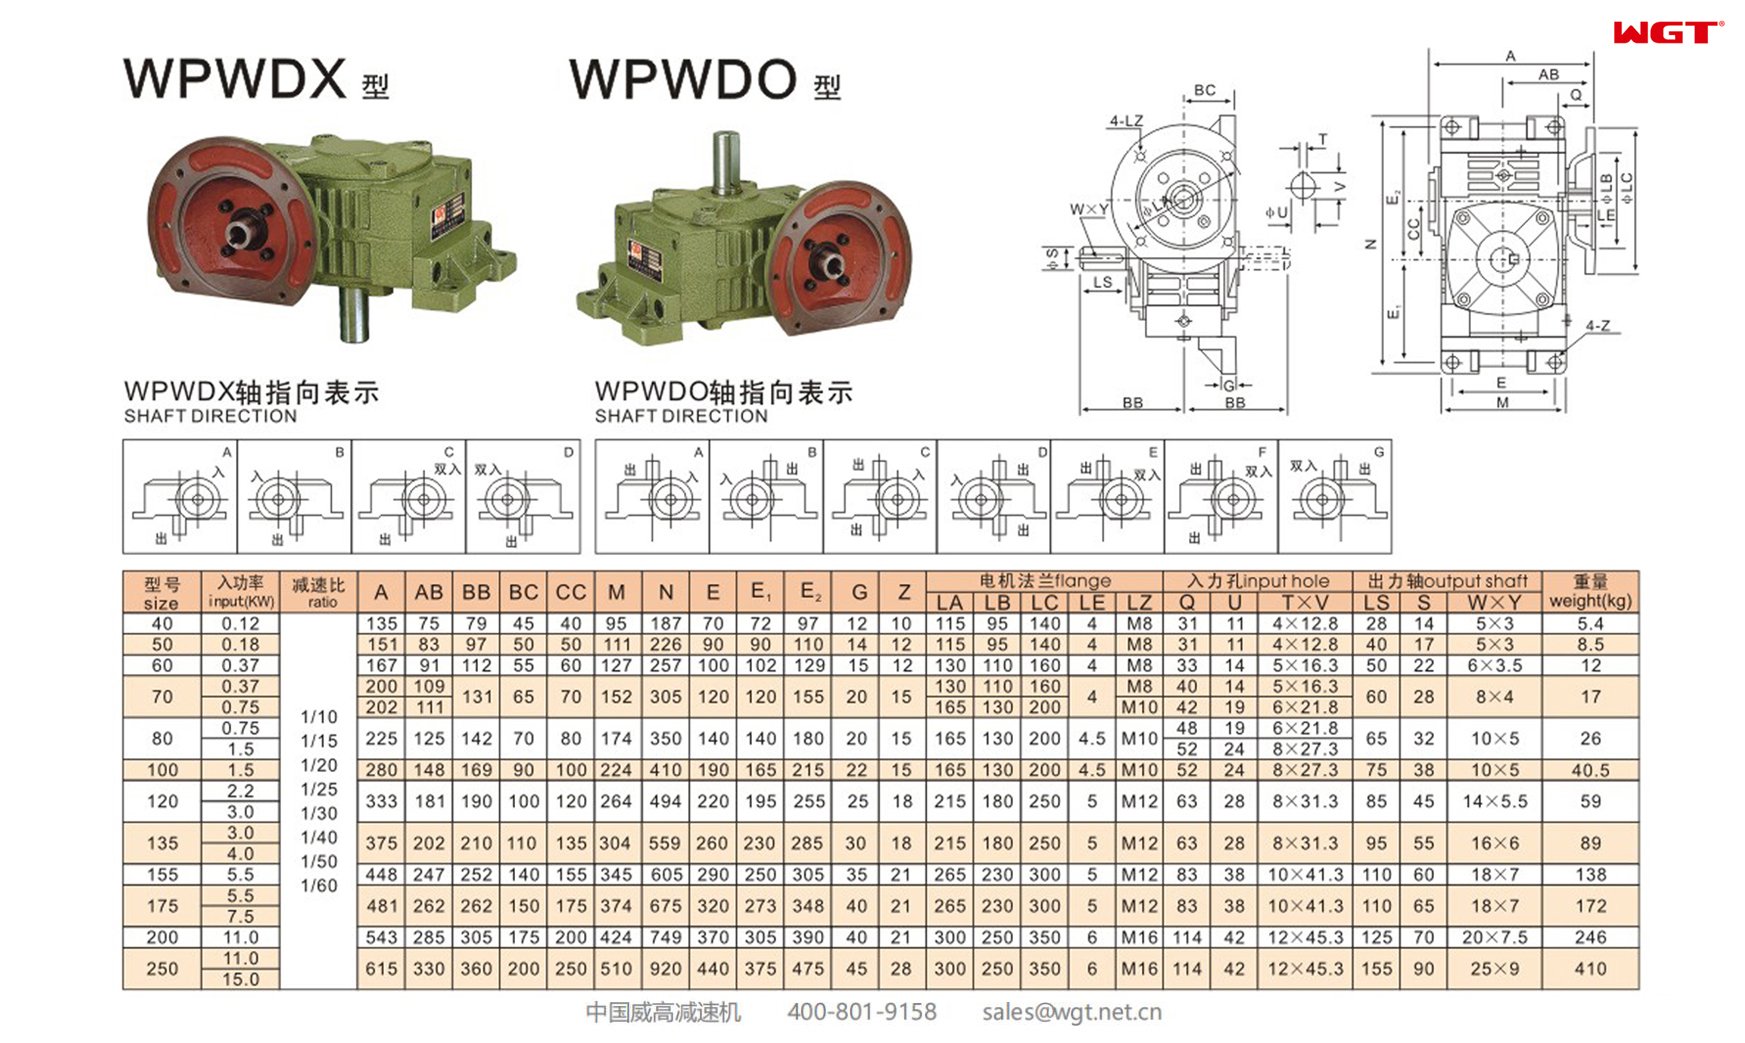 WPWDX WPWDO120 Worm Gear Reducer UNIVERSAL SPEED REDUCER